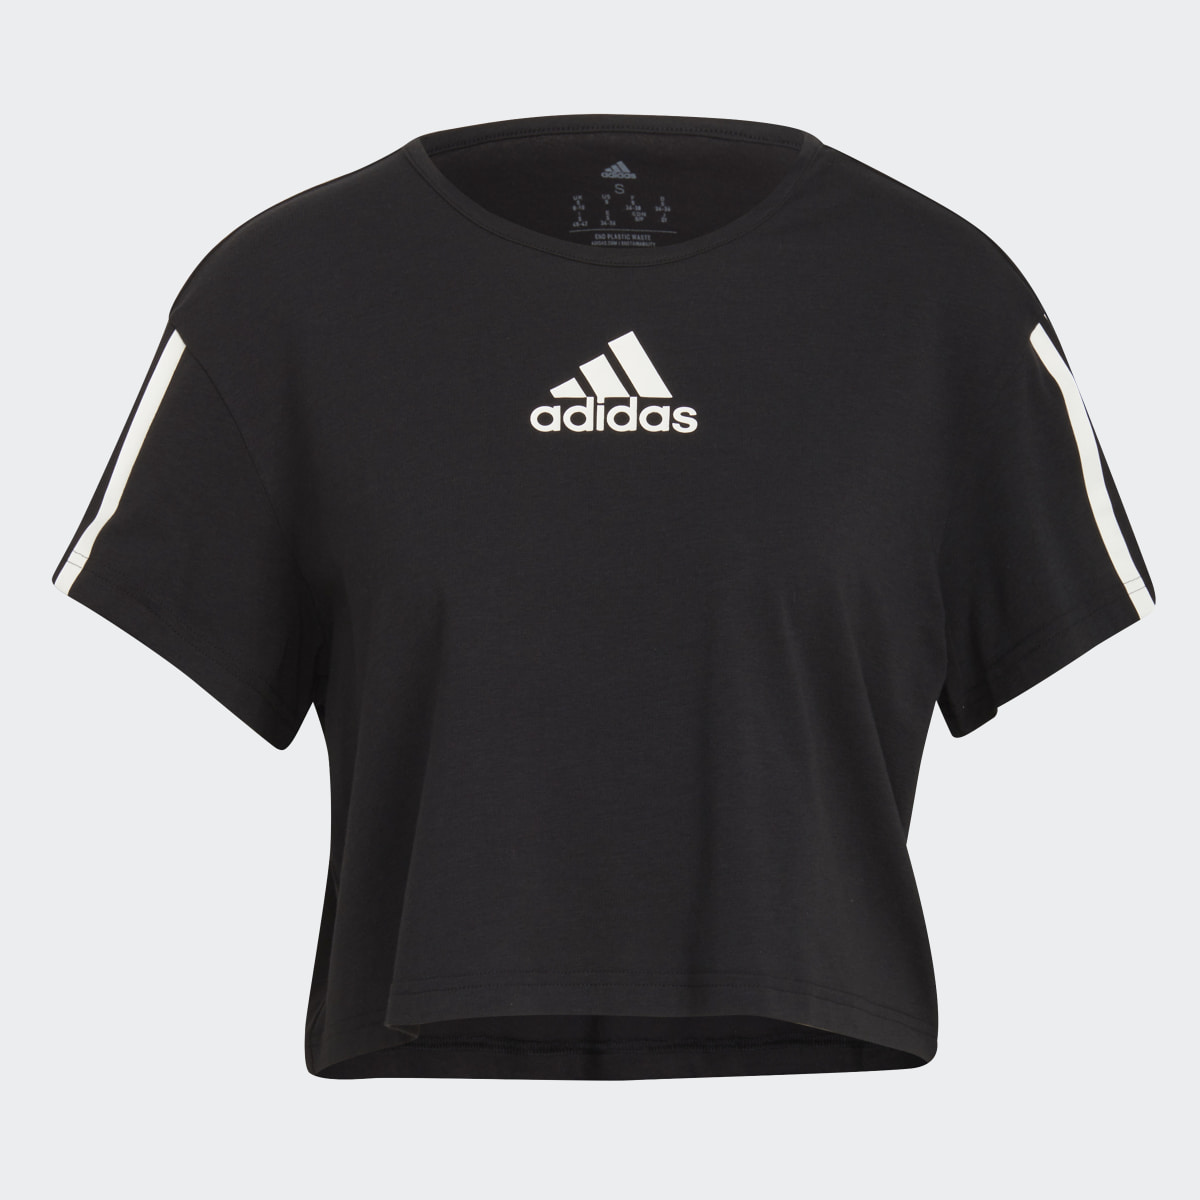 Adidas AEROREADY Made for Training Crop Sport T-Shirt. 5